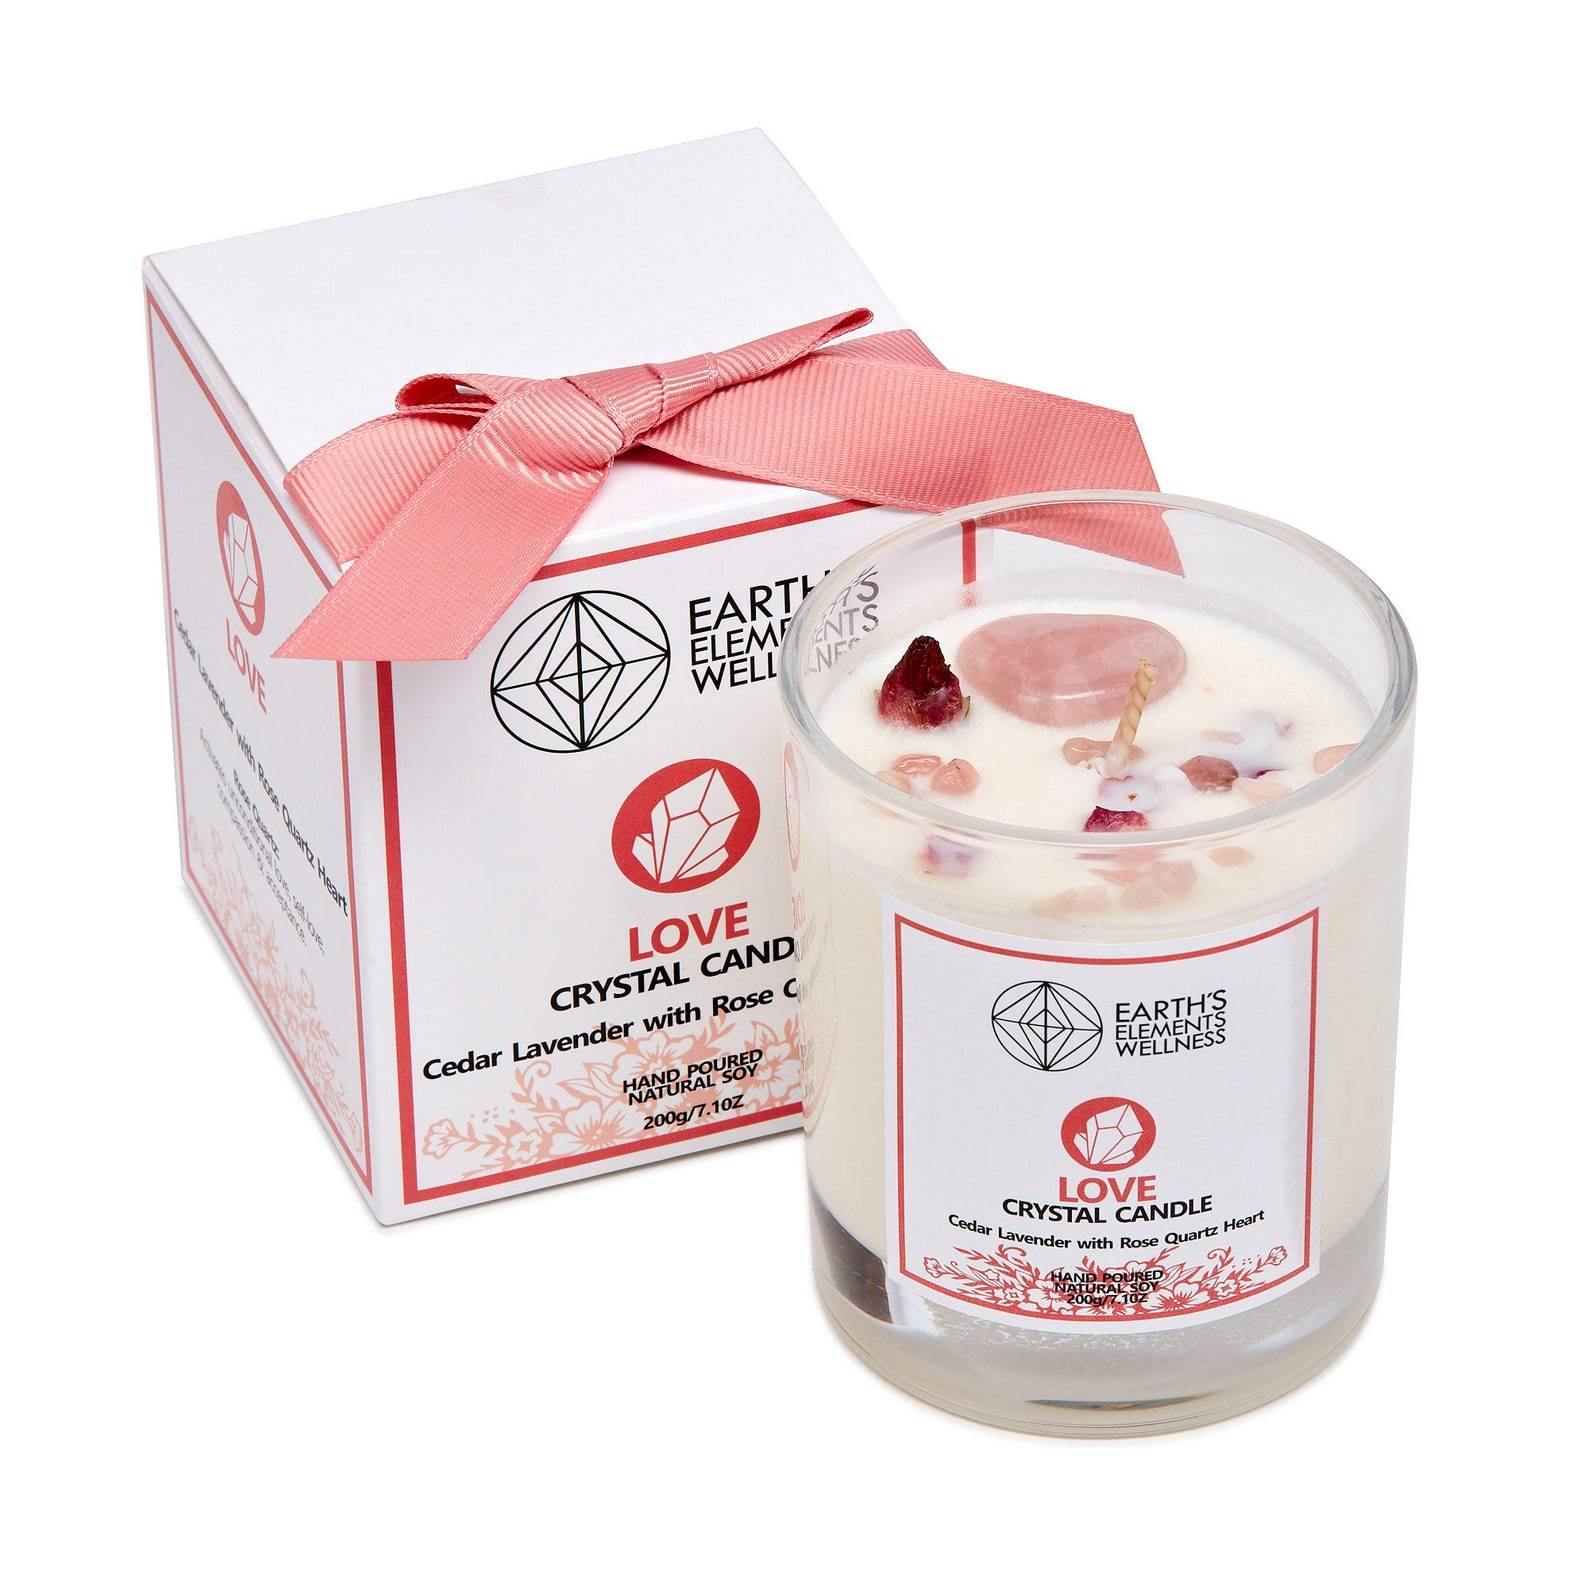 Love Crystal Candle - Cedar Lavender with Rose Quartz Heart - The Rutile Ltd